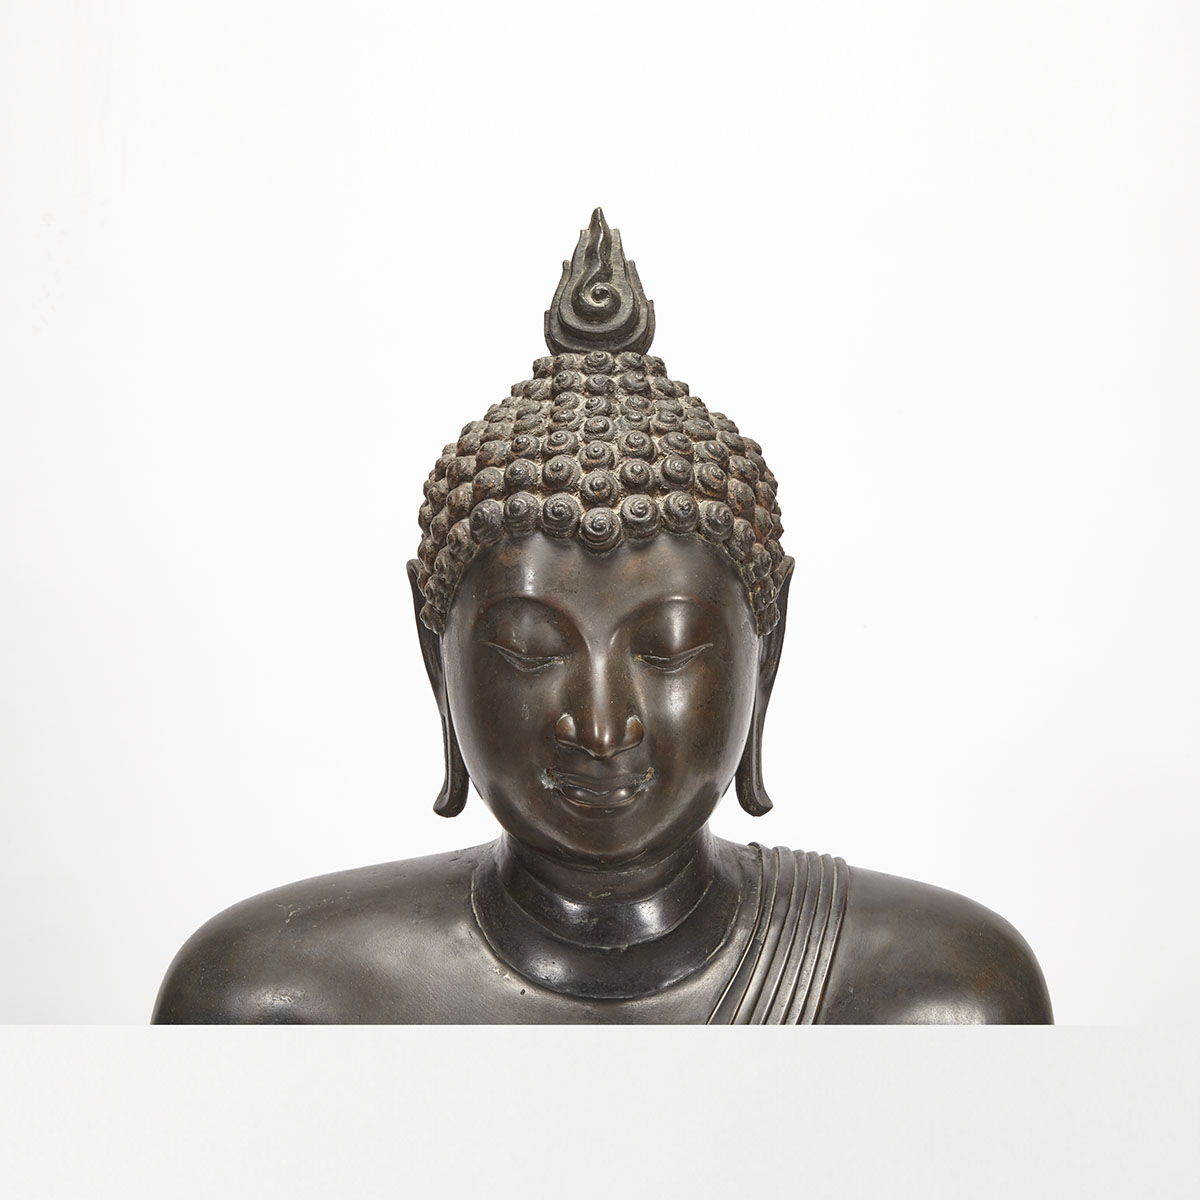 A Thai, Chien Seng or Sukhothai Style, Massive Bronze Figure of Buddha Sakyamuni, 15th/16th Century